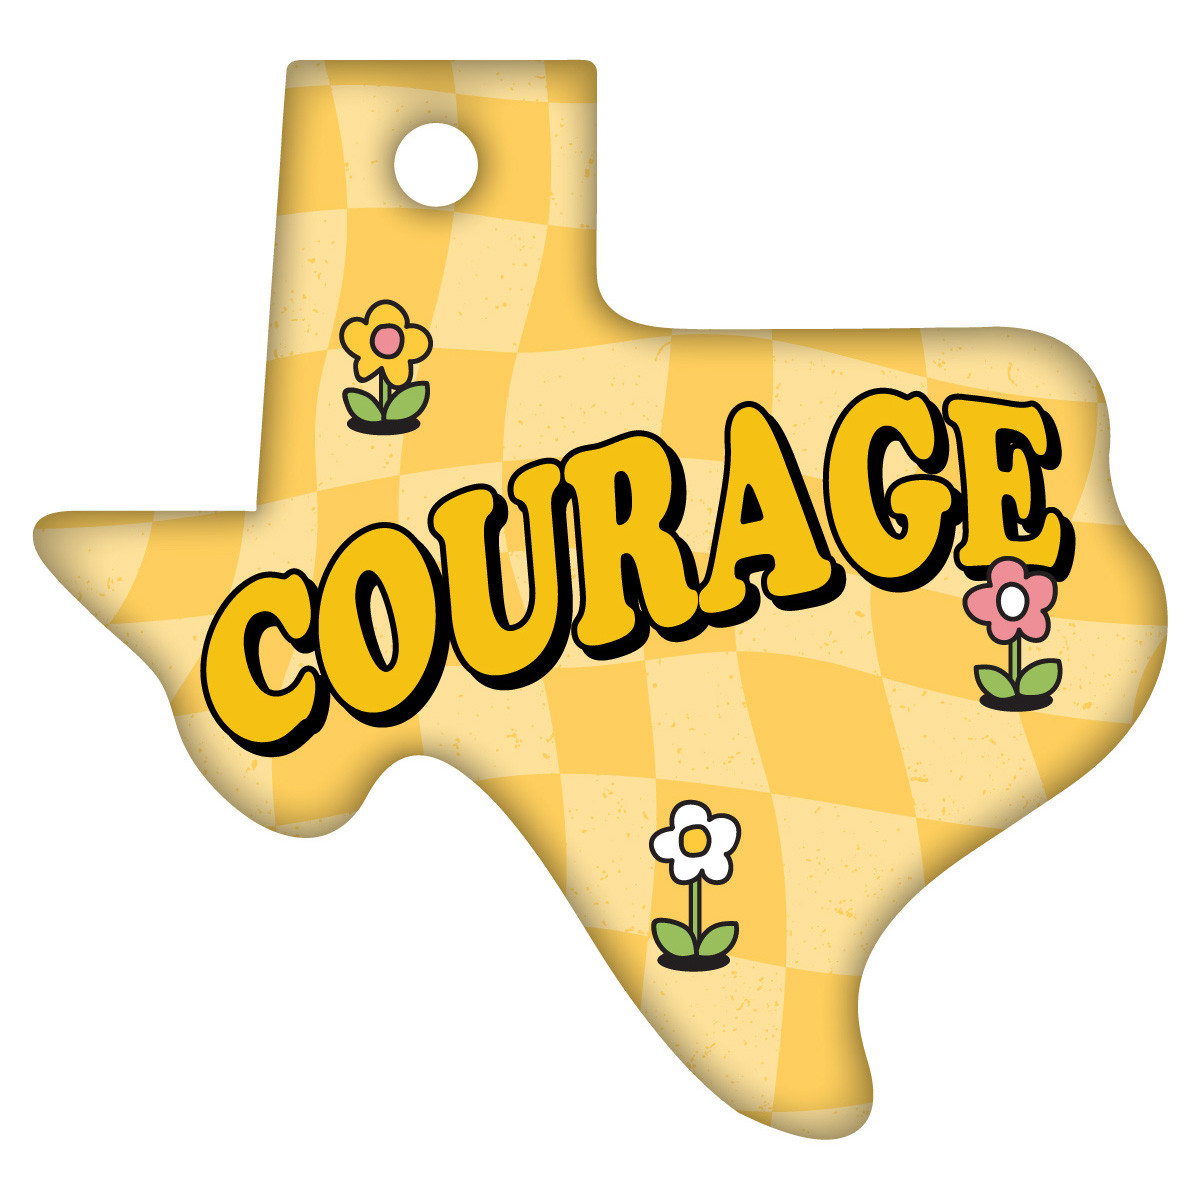 Texas Character Traits Brag Tags - Courage